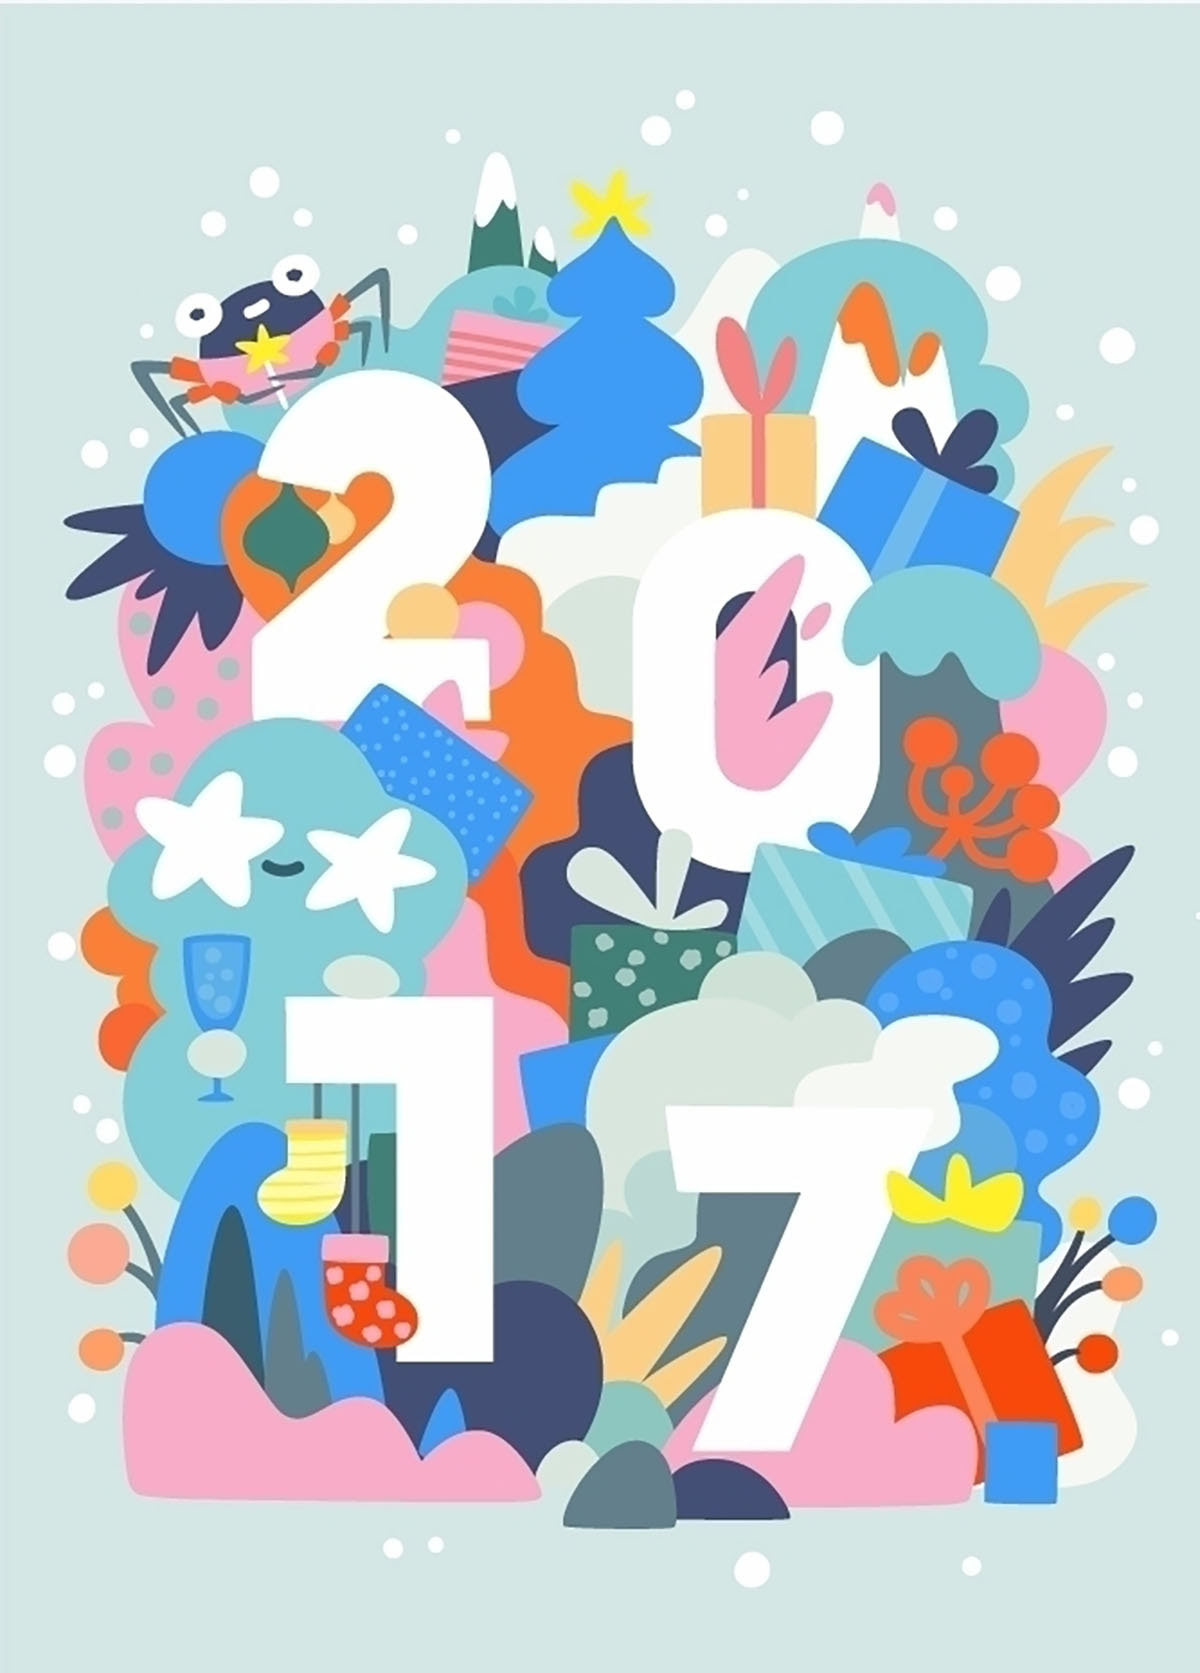 2017 graphic